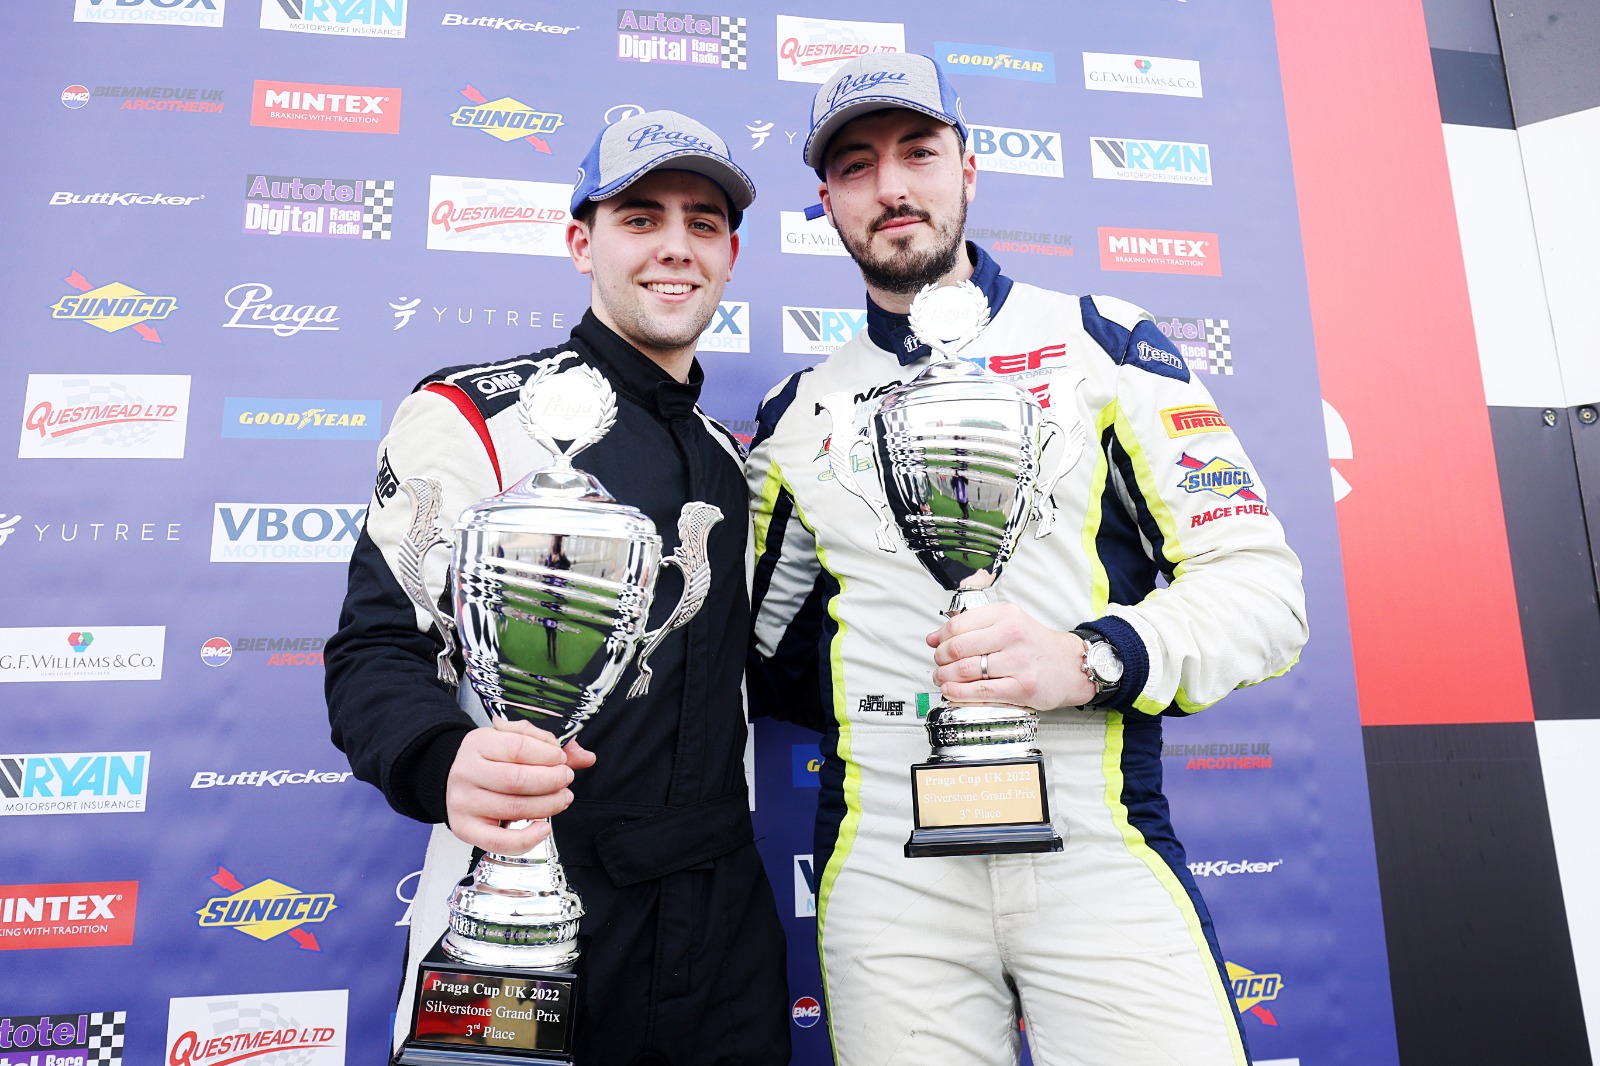 Race Report: Arden - Pragacup - Drivers